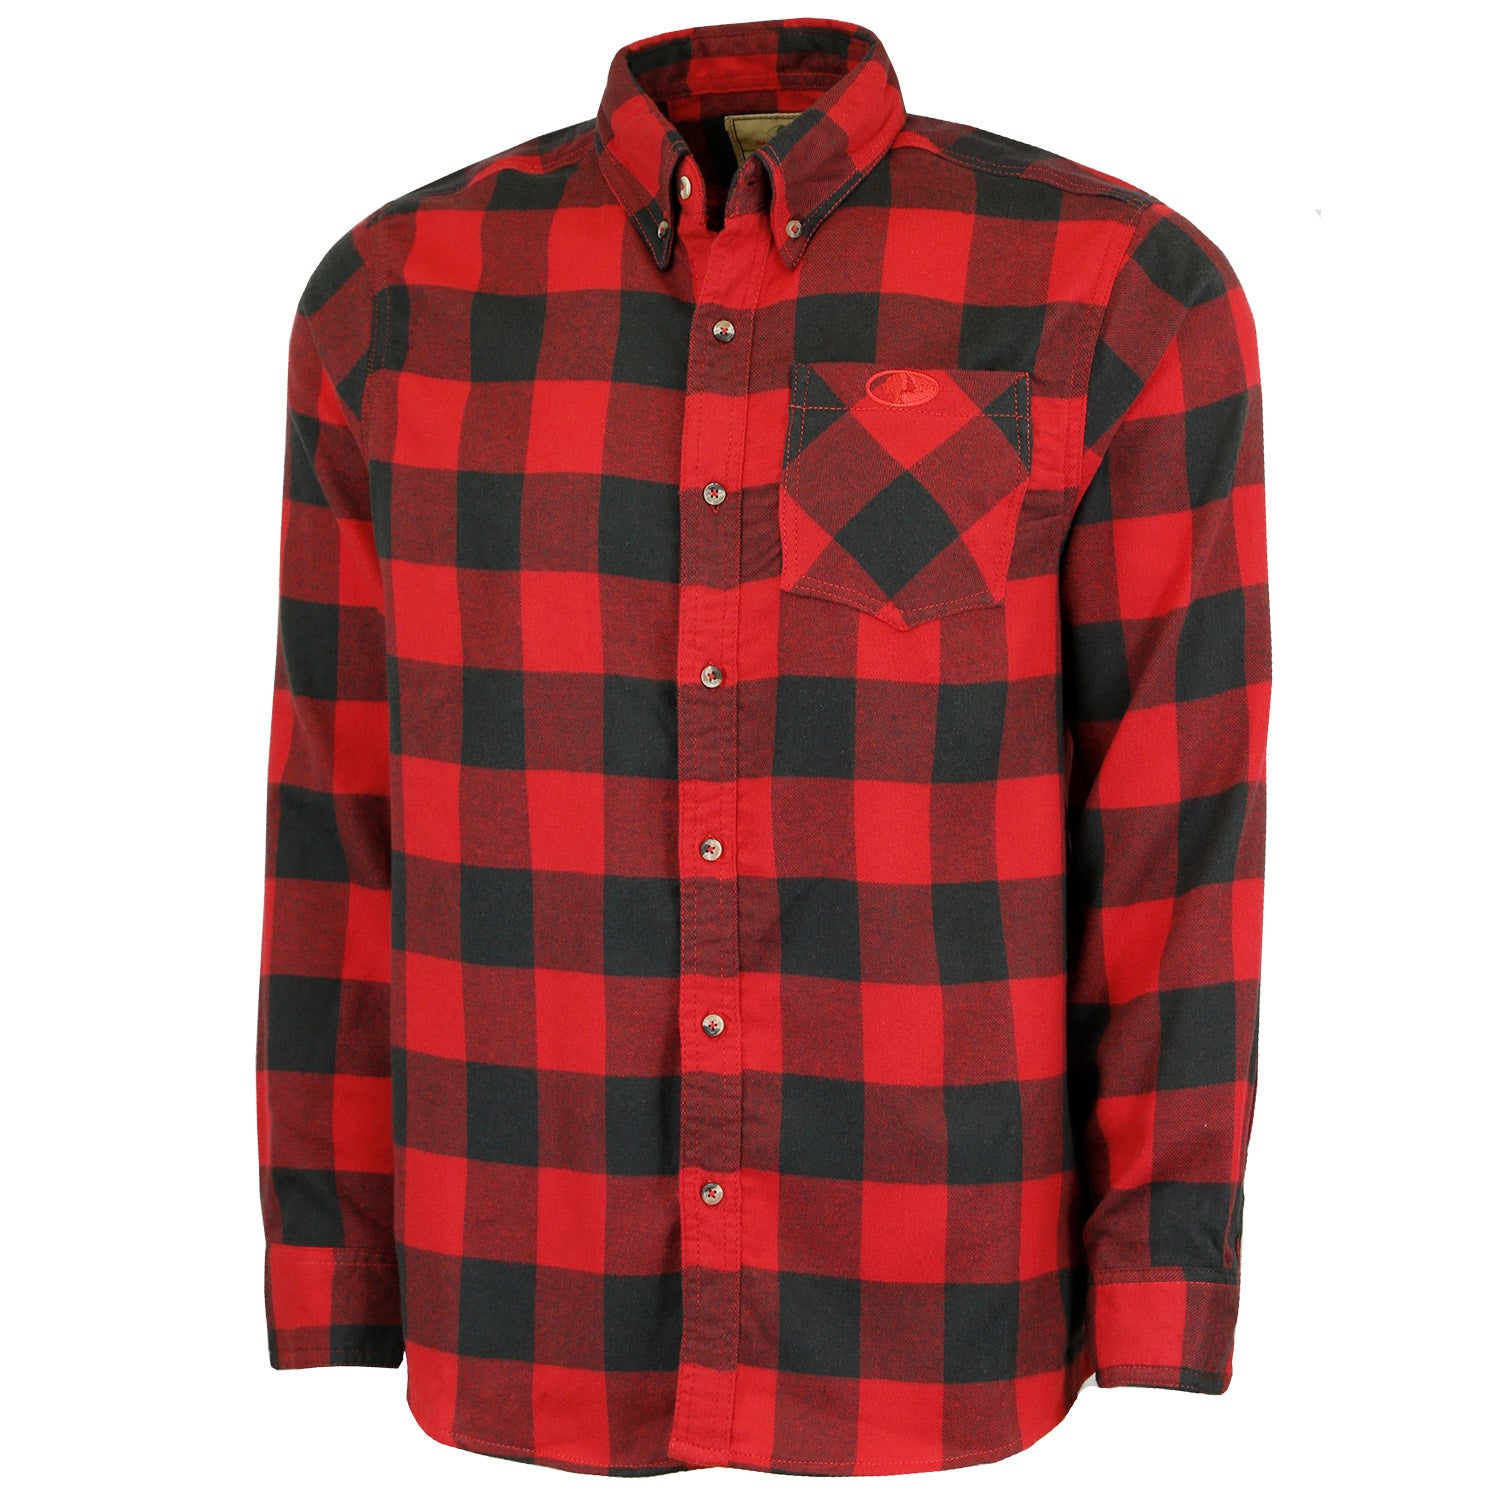 Mossy Oak Men's Thermal Lined Plaid Flannel Shirt – The Mossy Oak